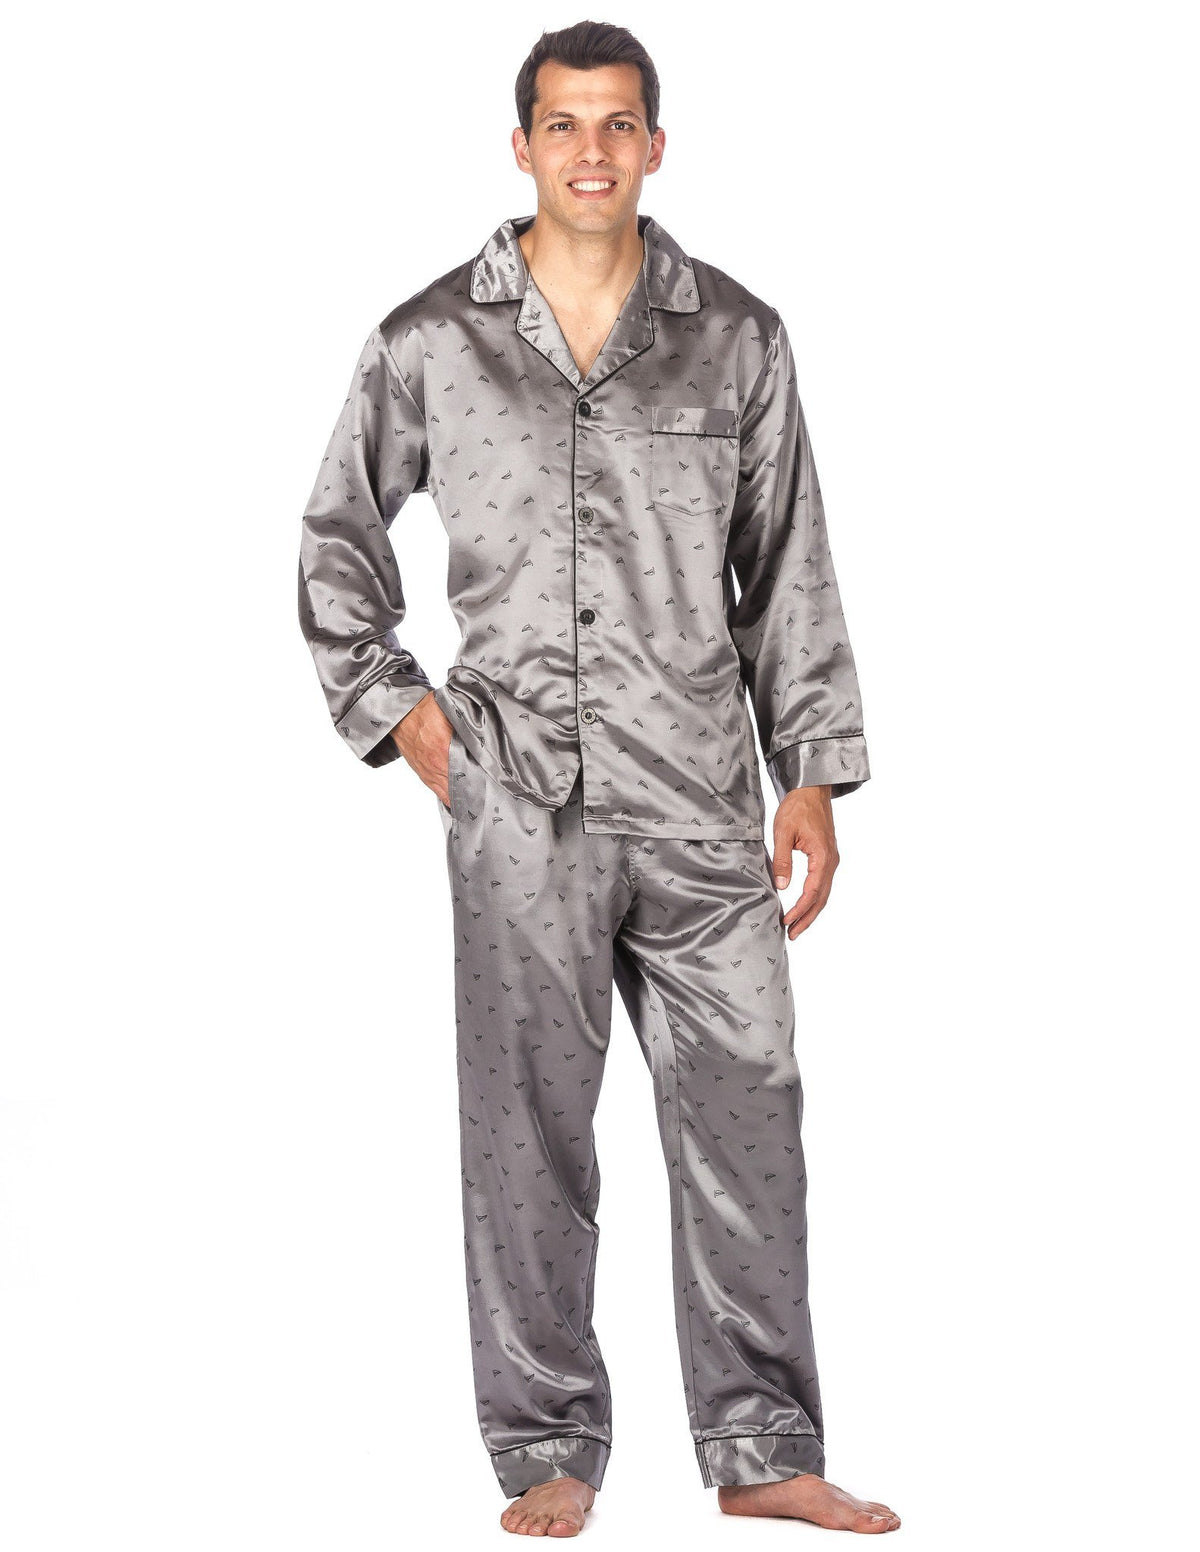 Men's Premium Satin Pajama Sleepwear Set - Charcoal Boat